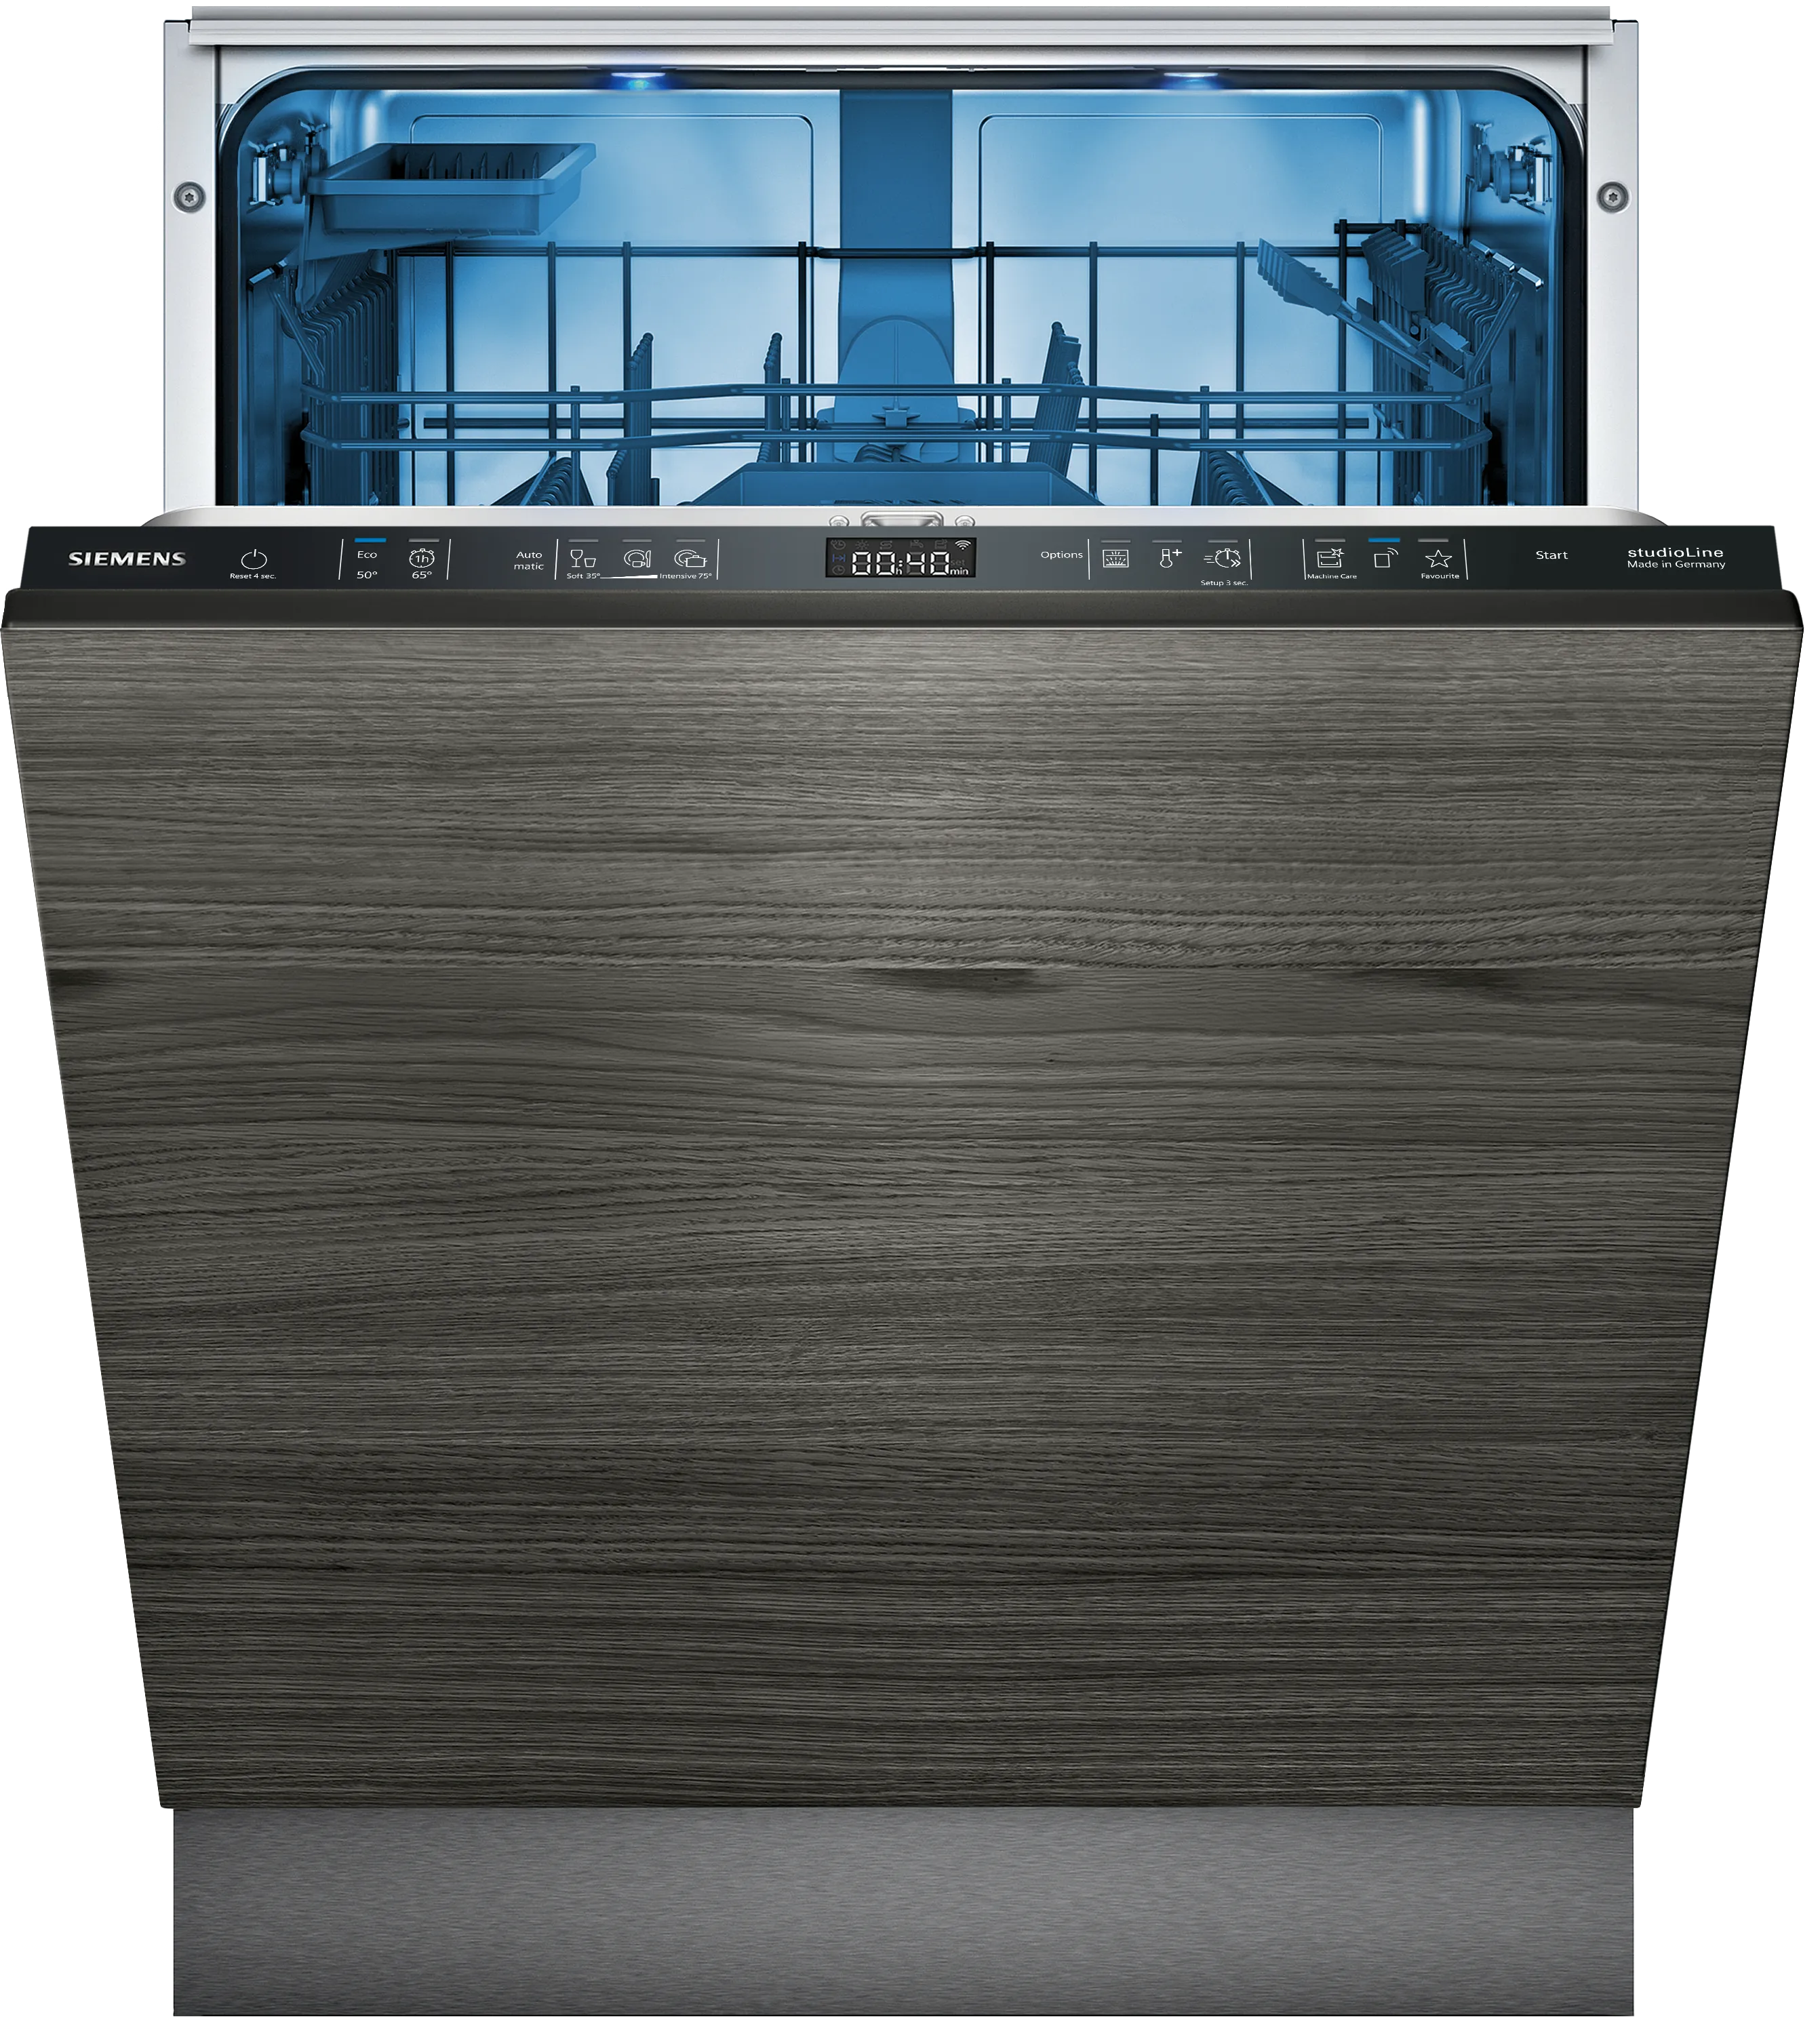 iQ500 fully-integrated dishwasher 60 cm 